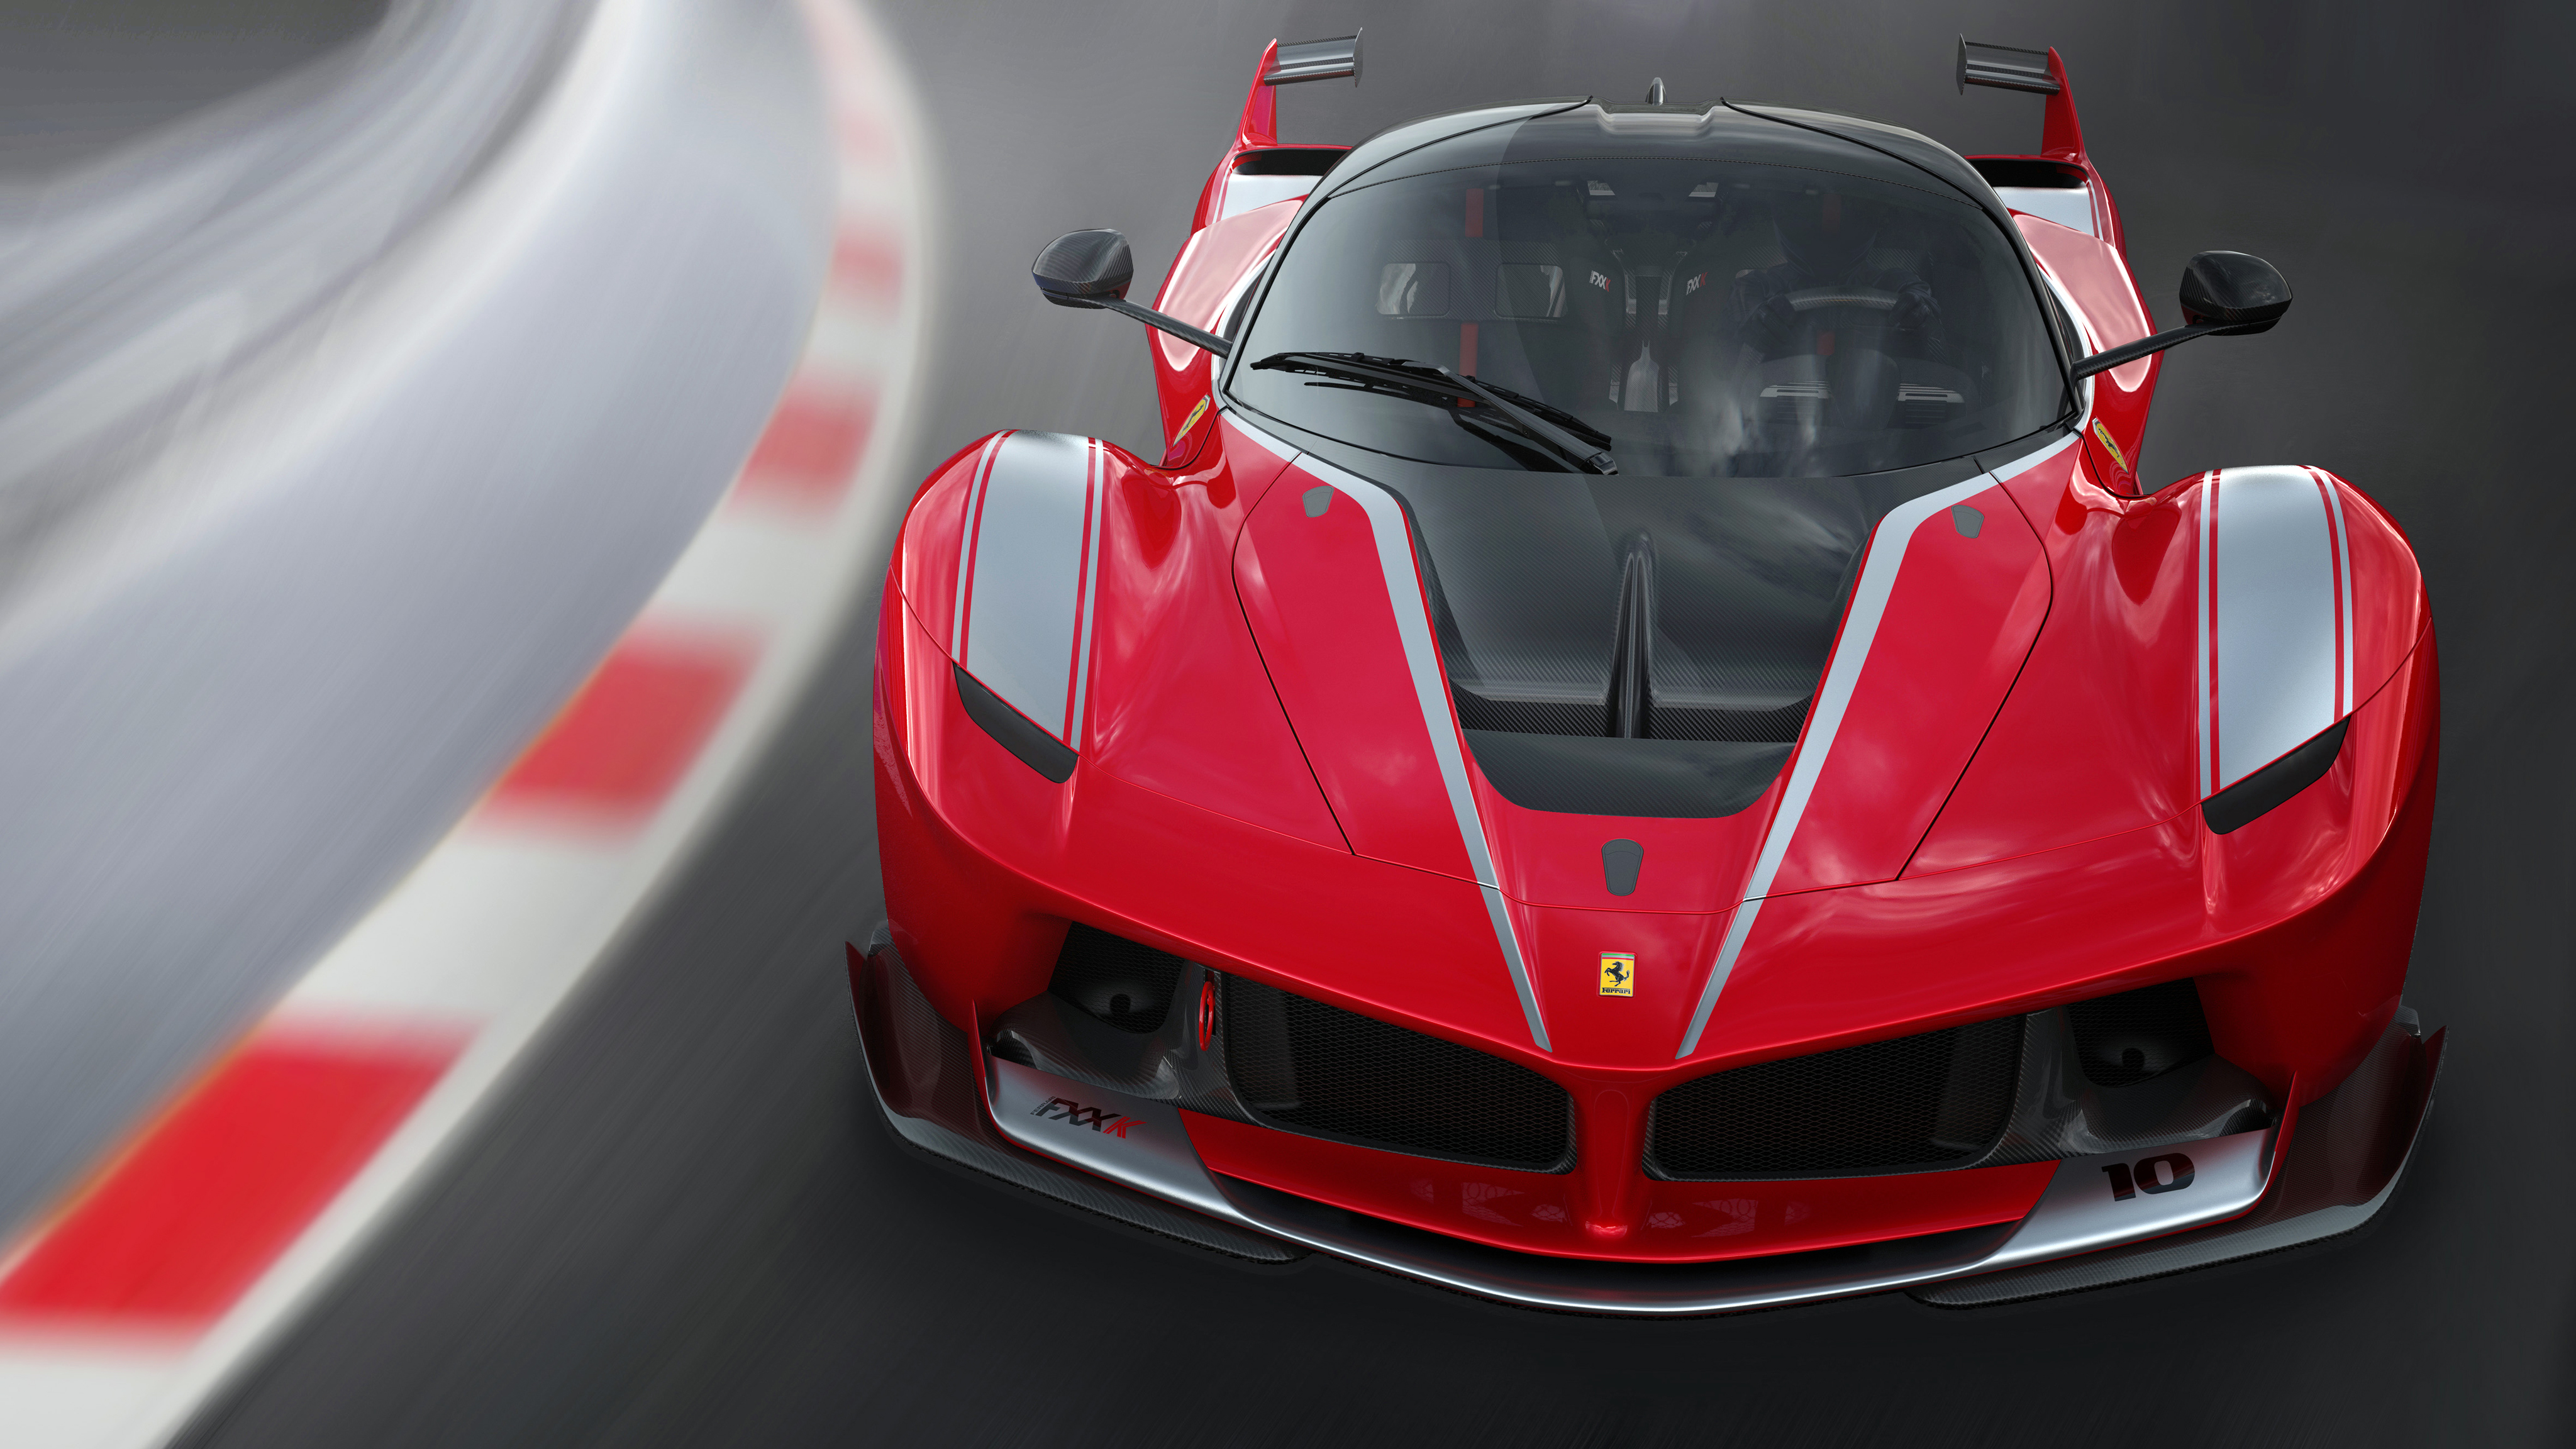  Ferrari HQ Background Images